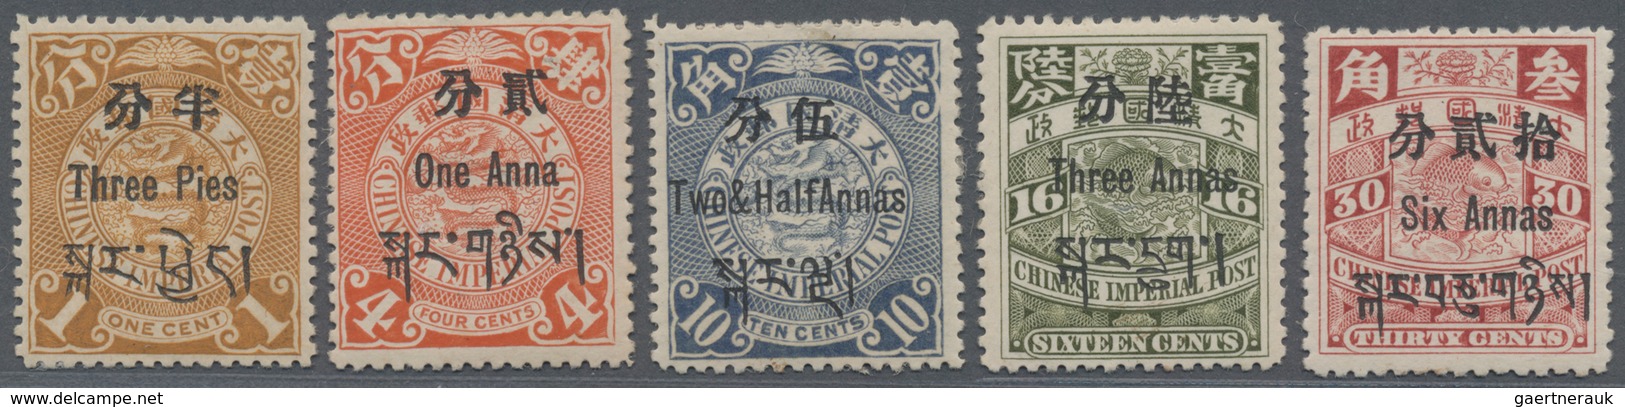 China - Provinzausgaben - Chinesische Post In Tibet (1911): 1911, 3 P., 1 A., 2 ½ A., 3 A. And 6 A. - Xinjiang 1915-49